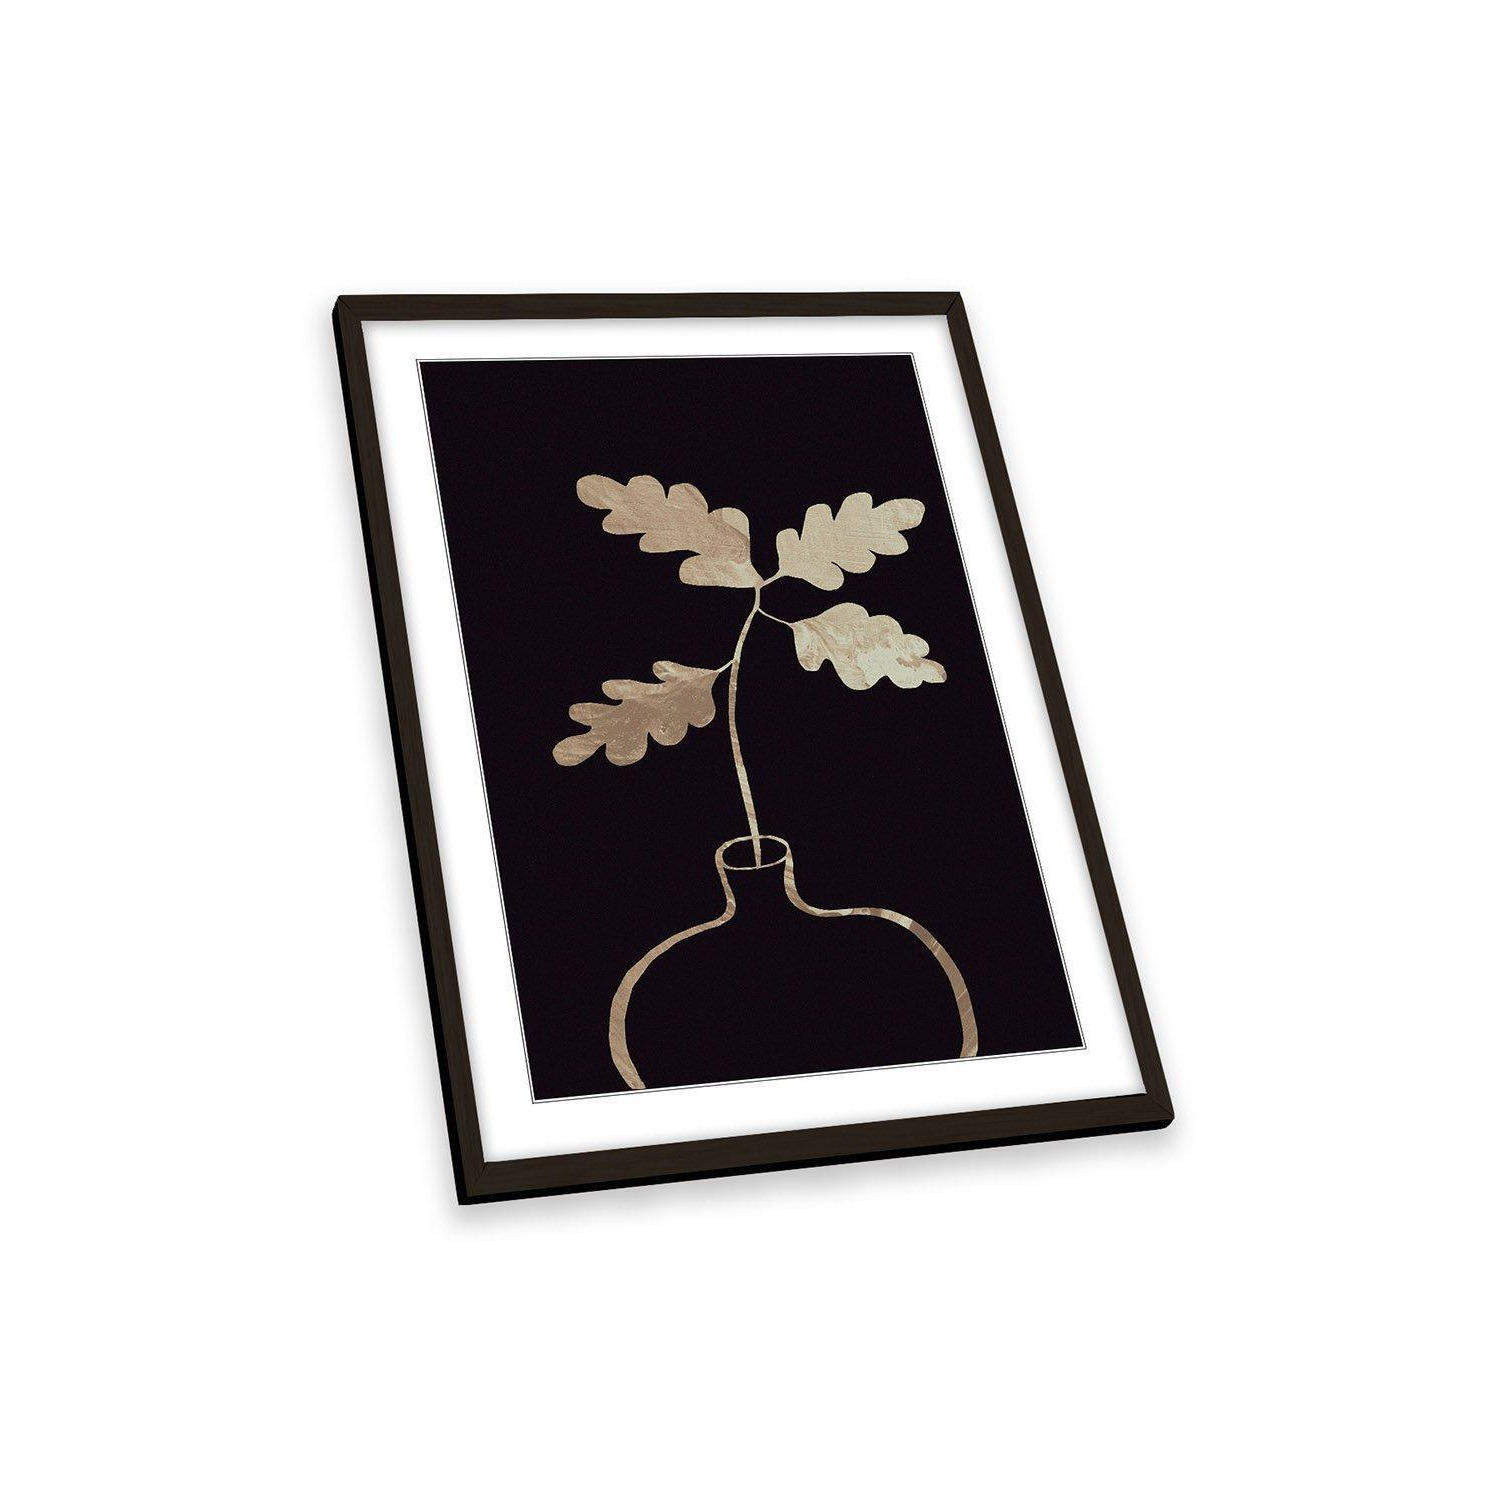 Leaves in Gold Vase Black Background Framed Art Print Picture Wall Artwork - (W)26cm x (H)35cm - image 1